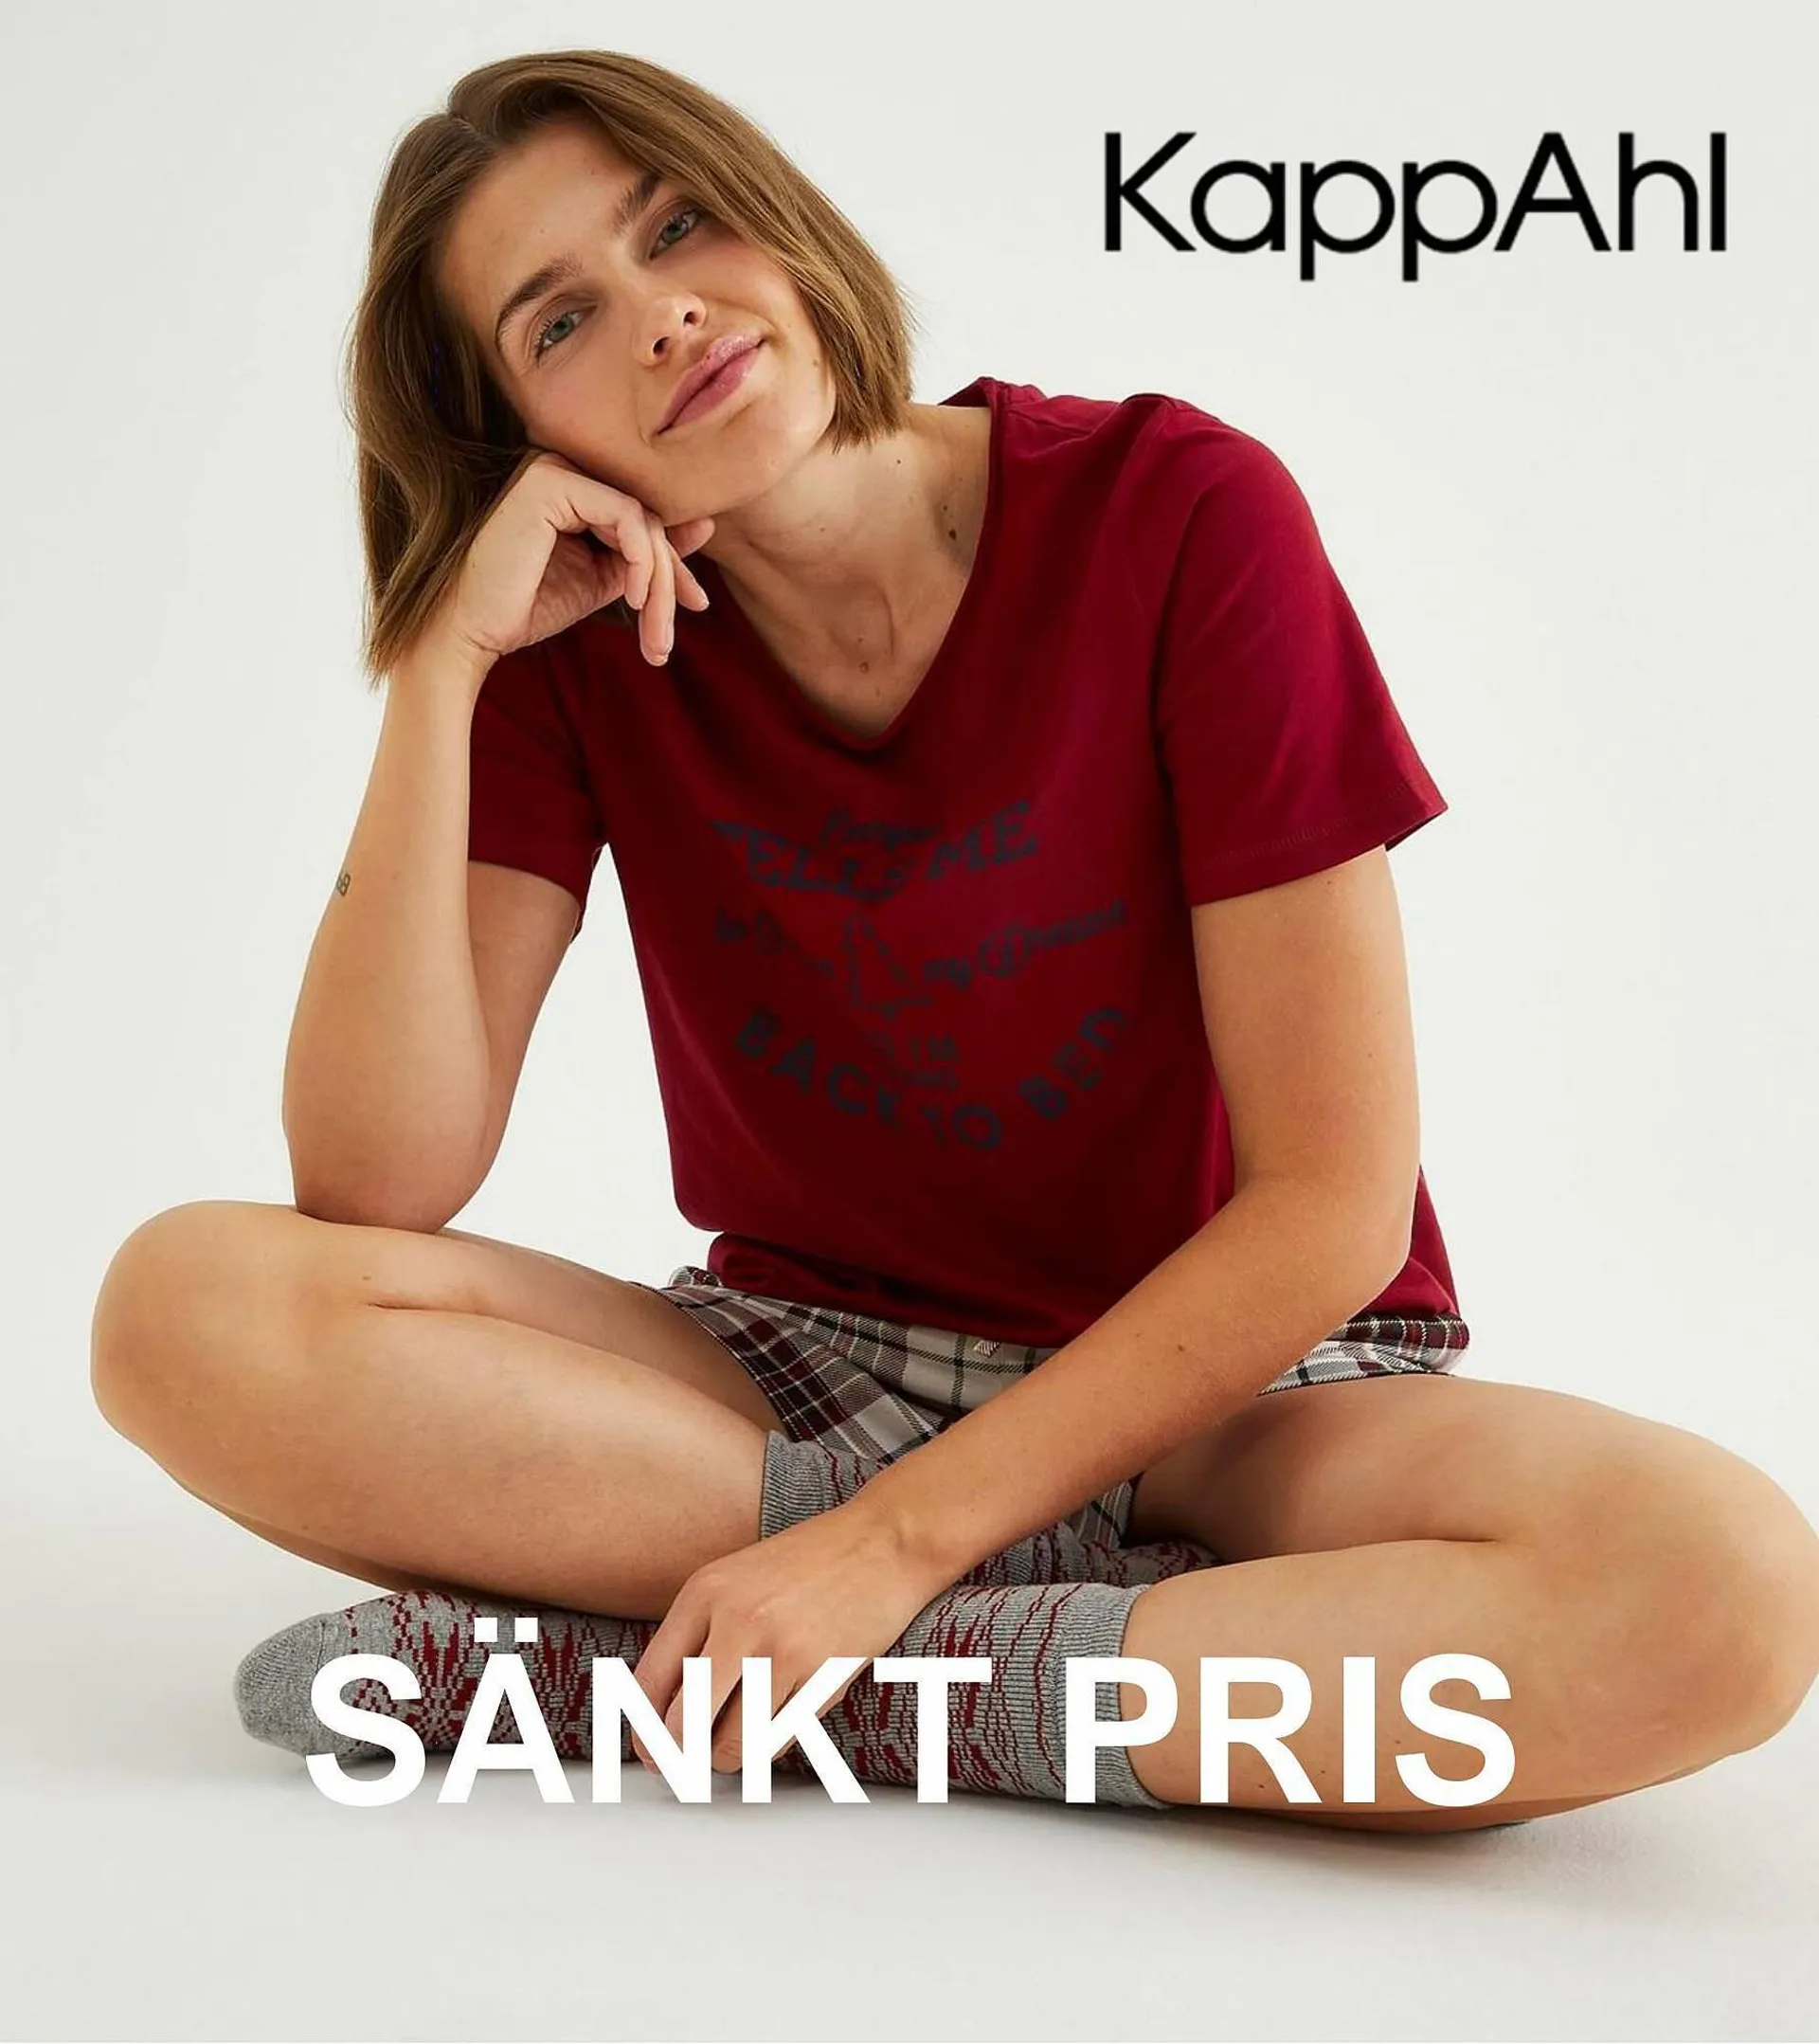 KappAhl reklamblad - 1